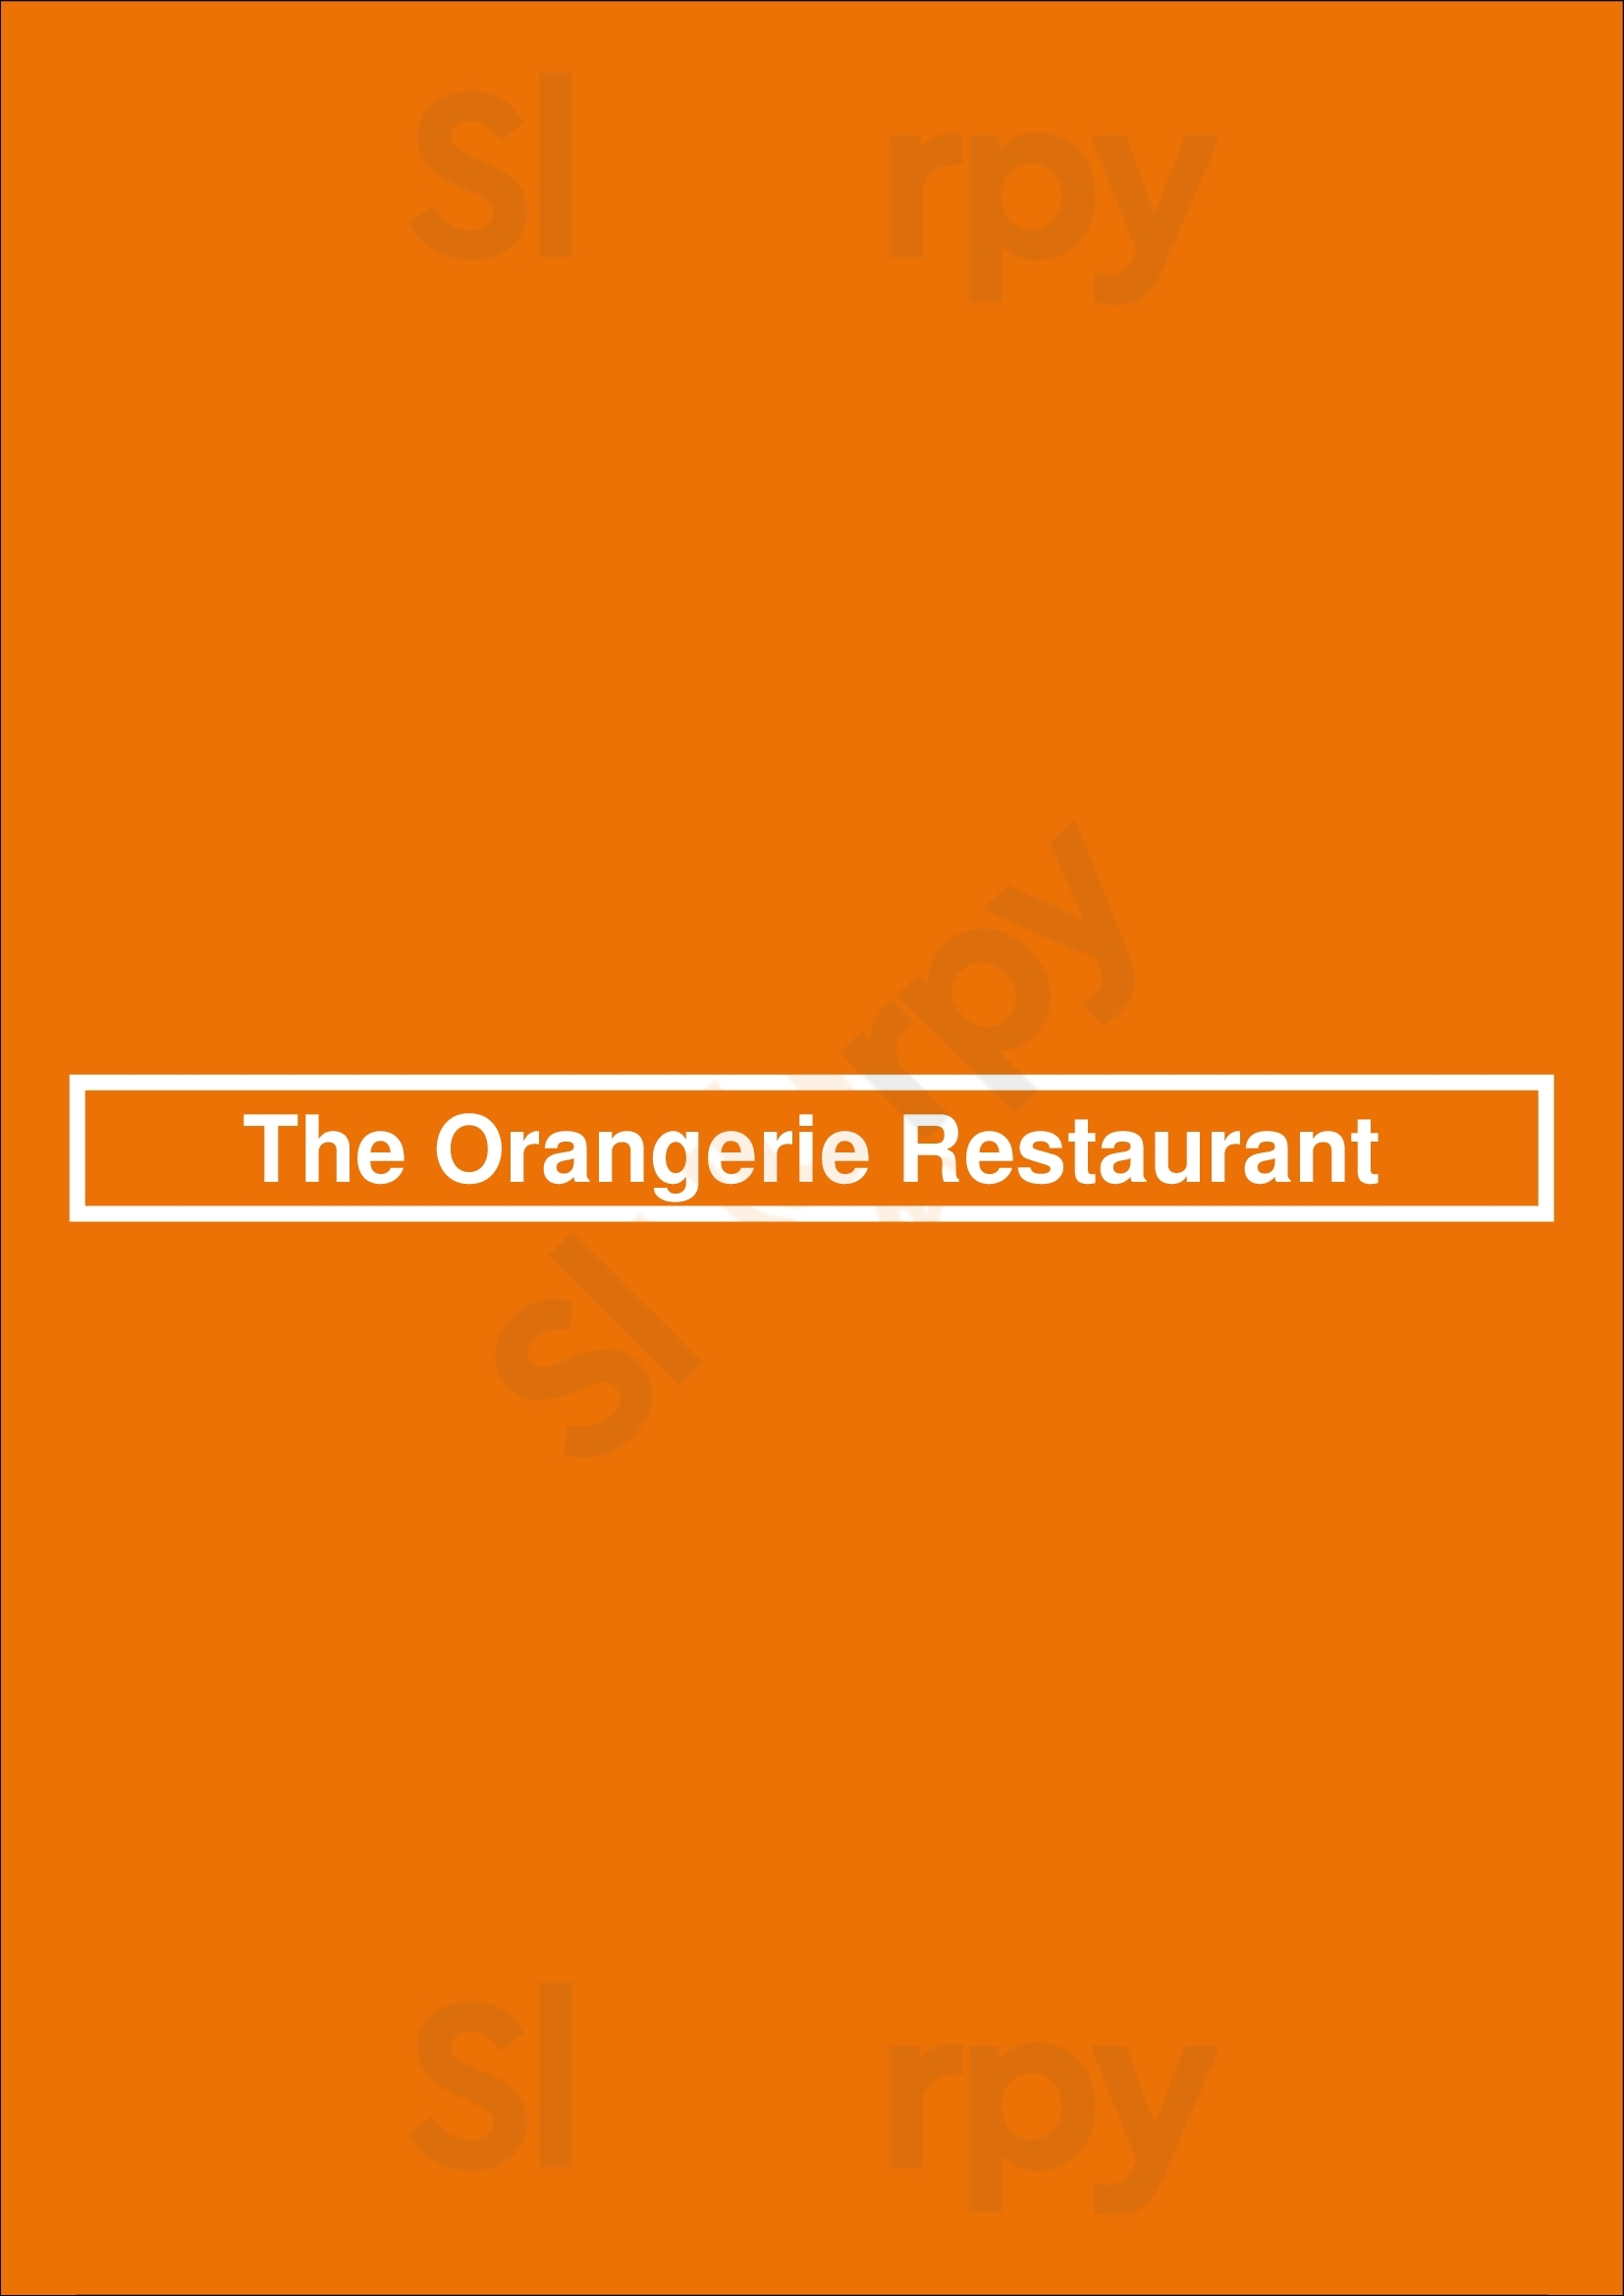 The Orangerie Restaurant Vila Nova de Gaia Menu - 1